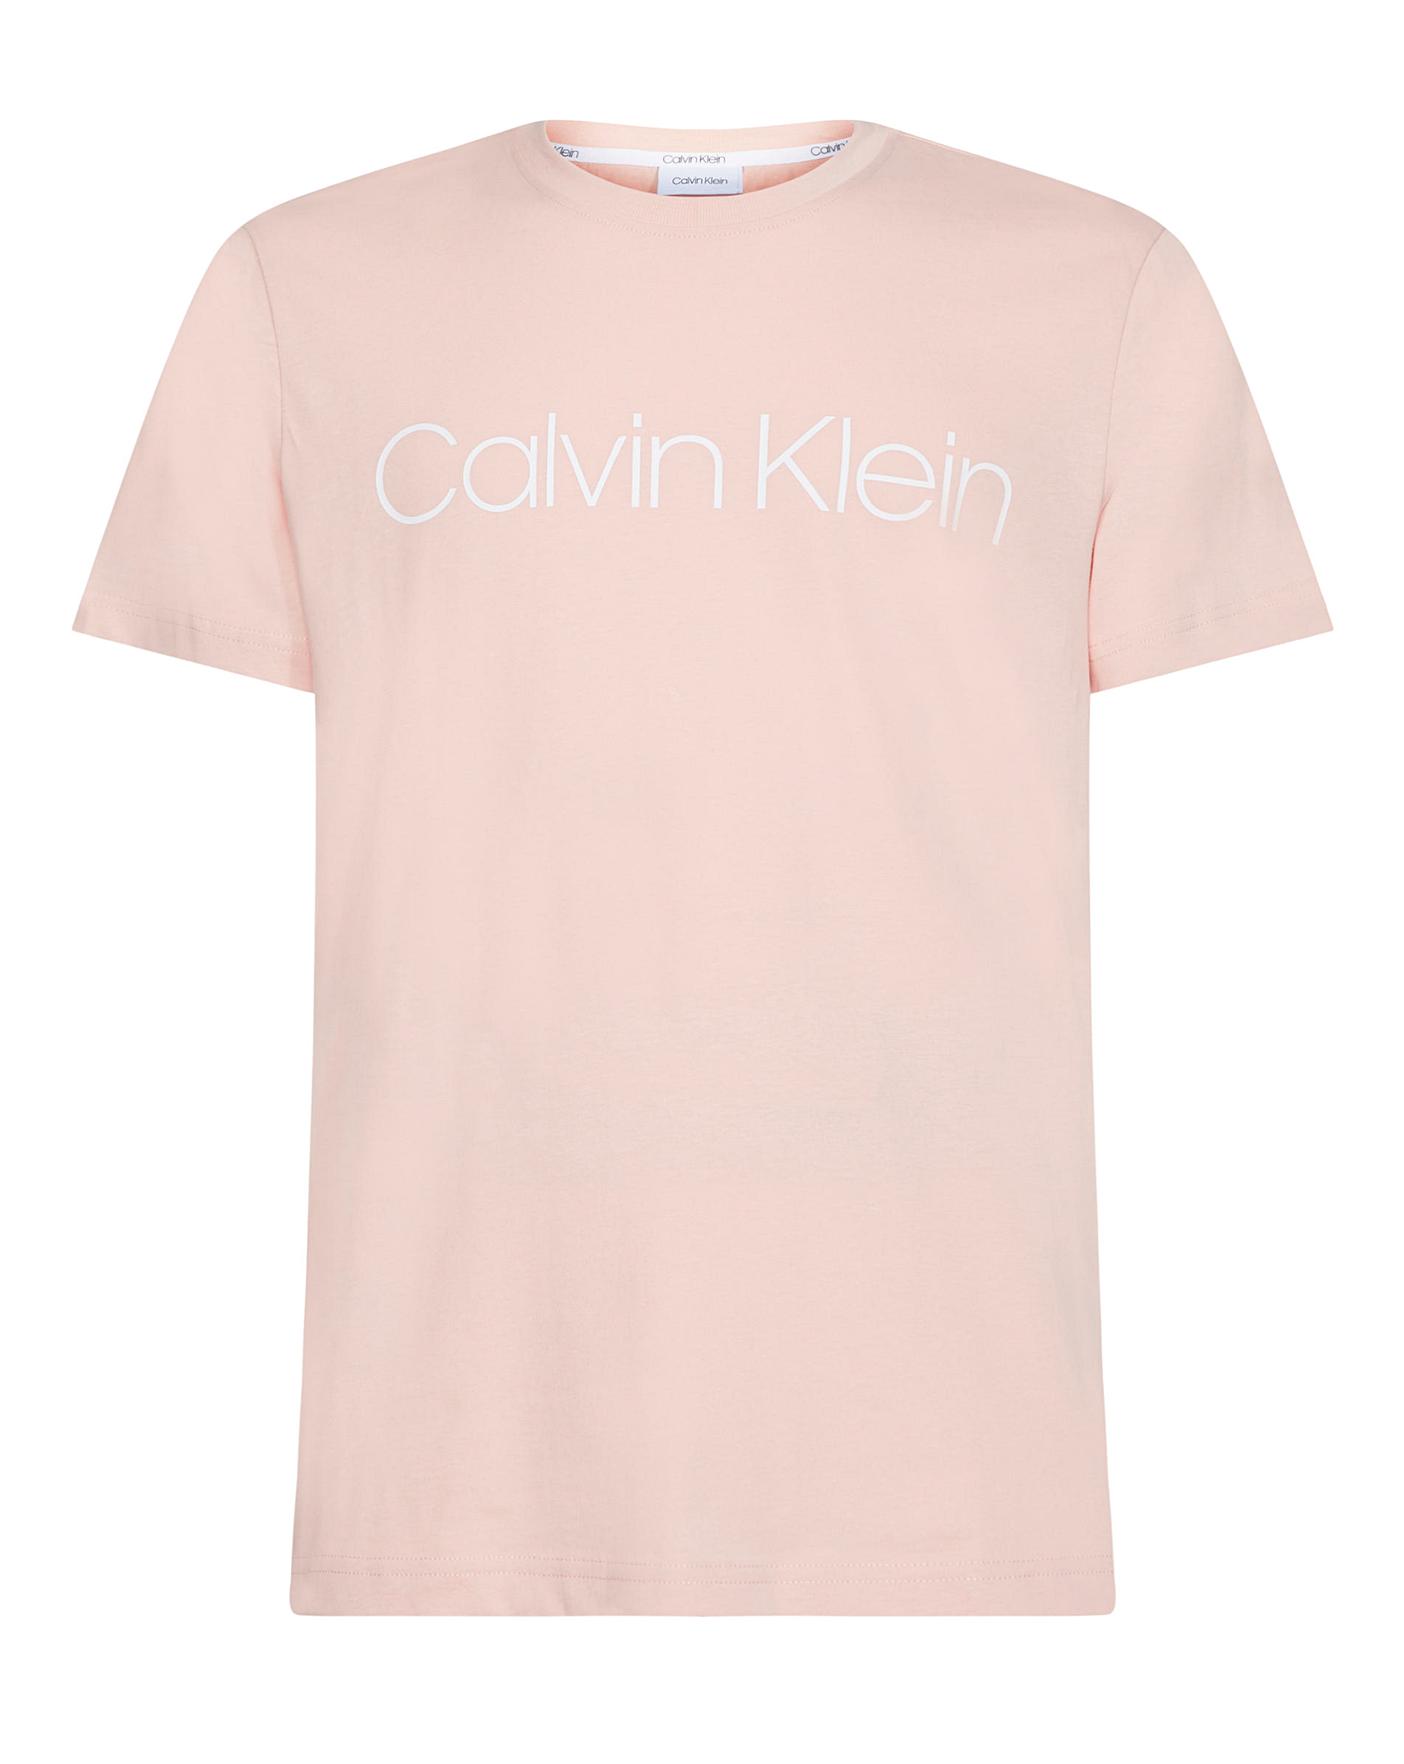 calvin klein pink t shirt